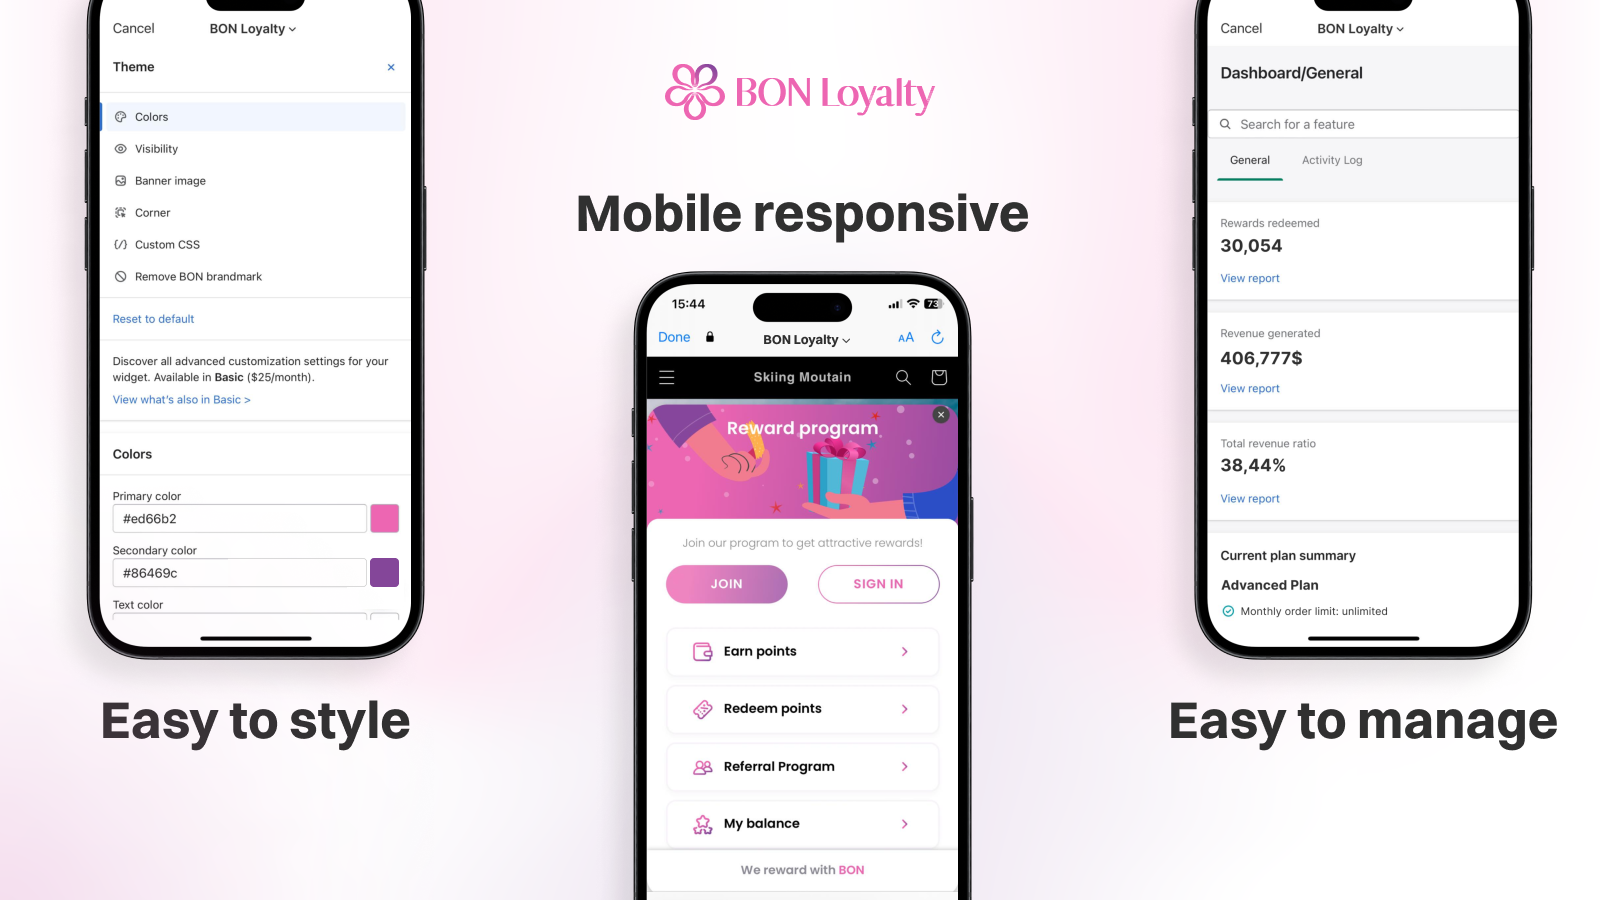 BON Loyalty provide mobile-responsive user interface